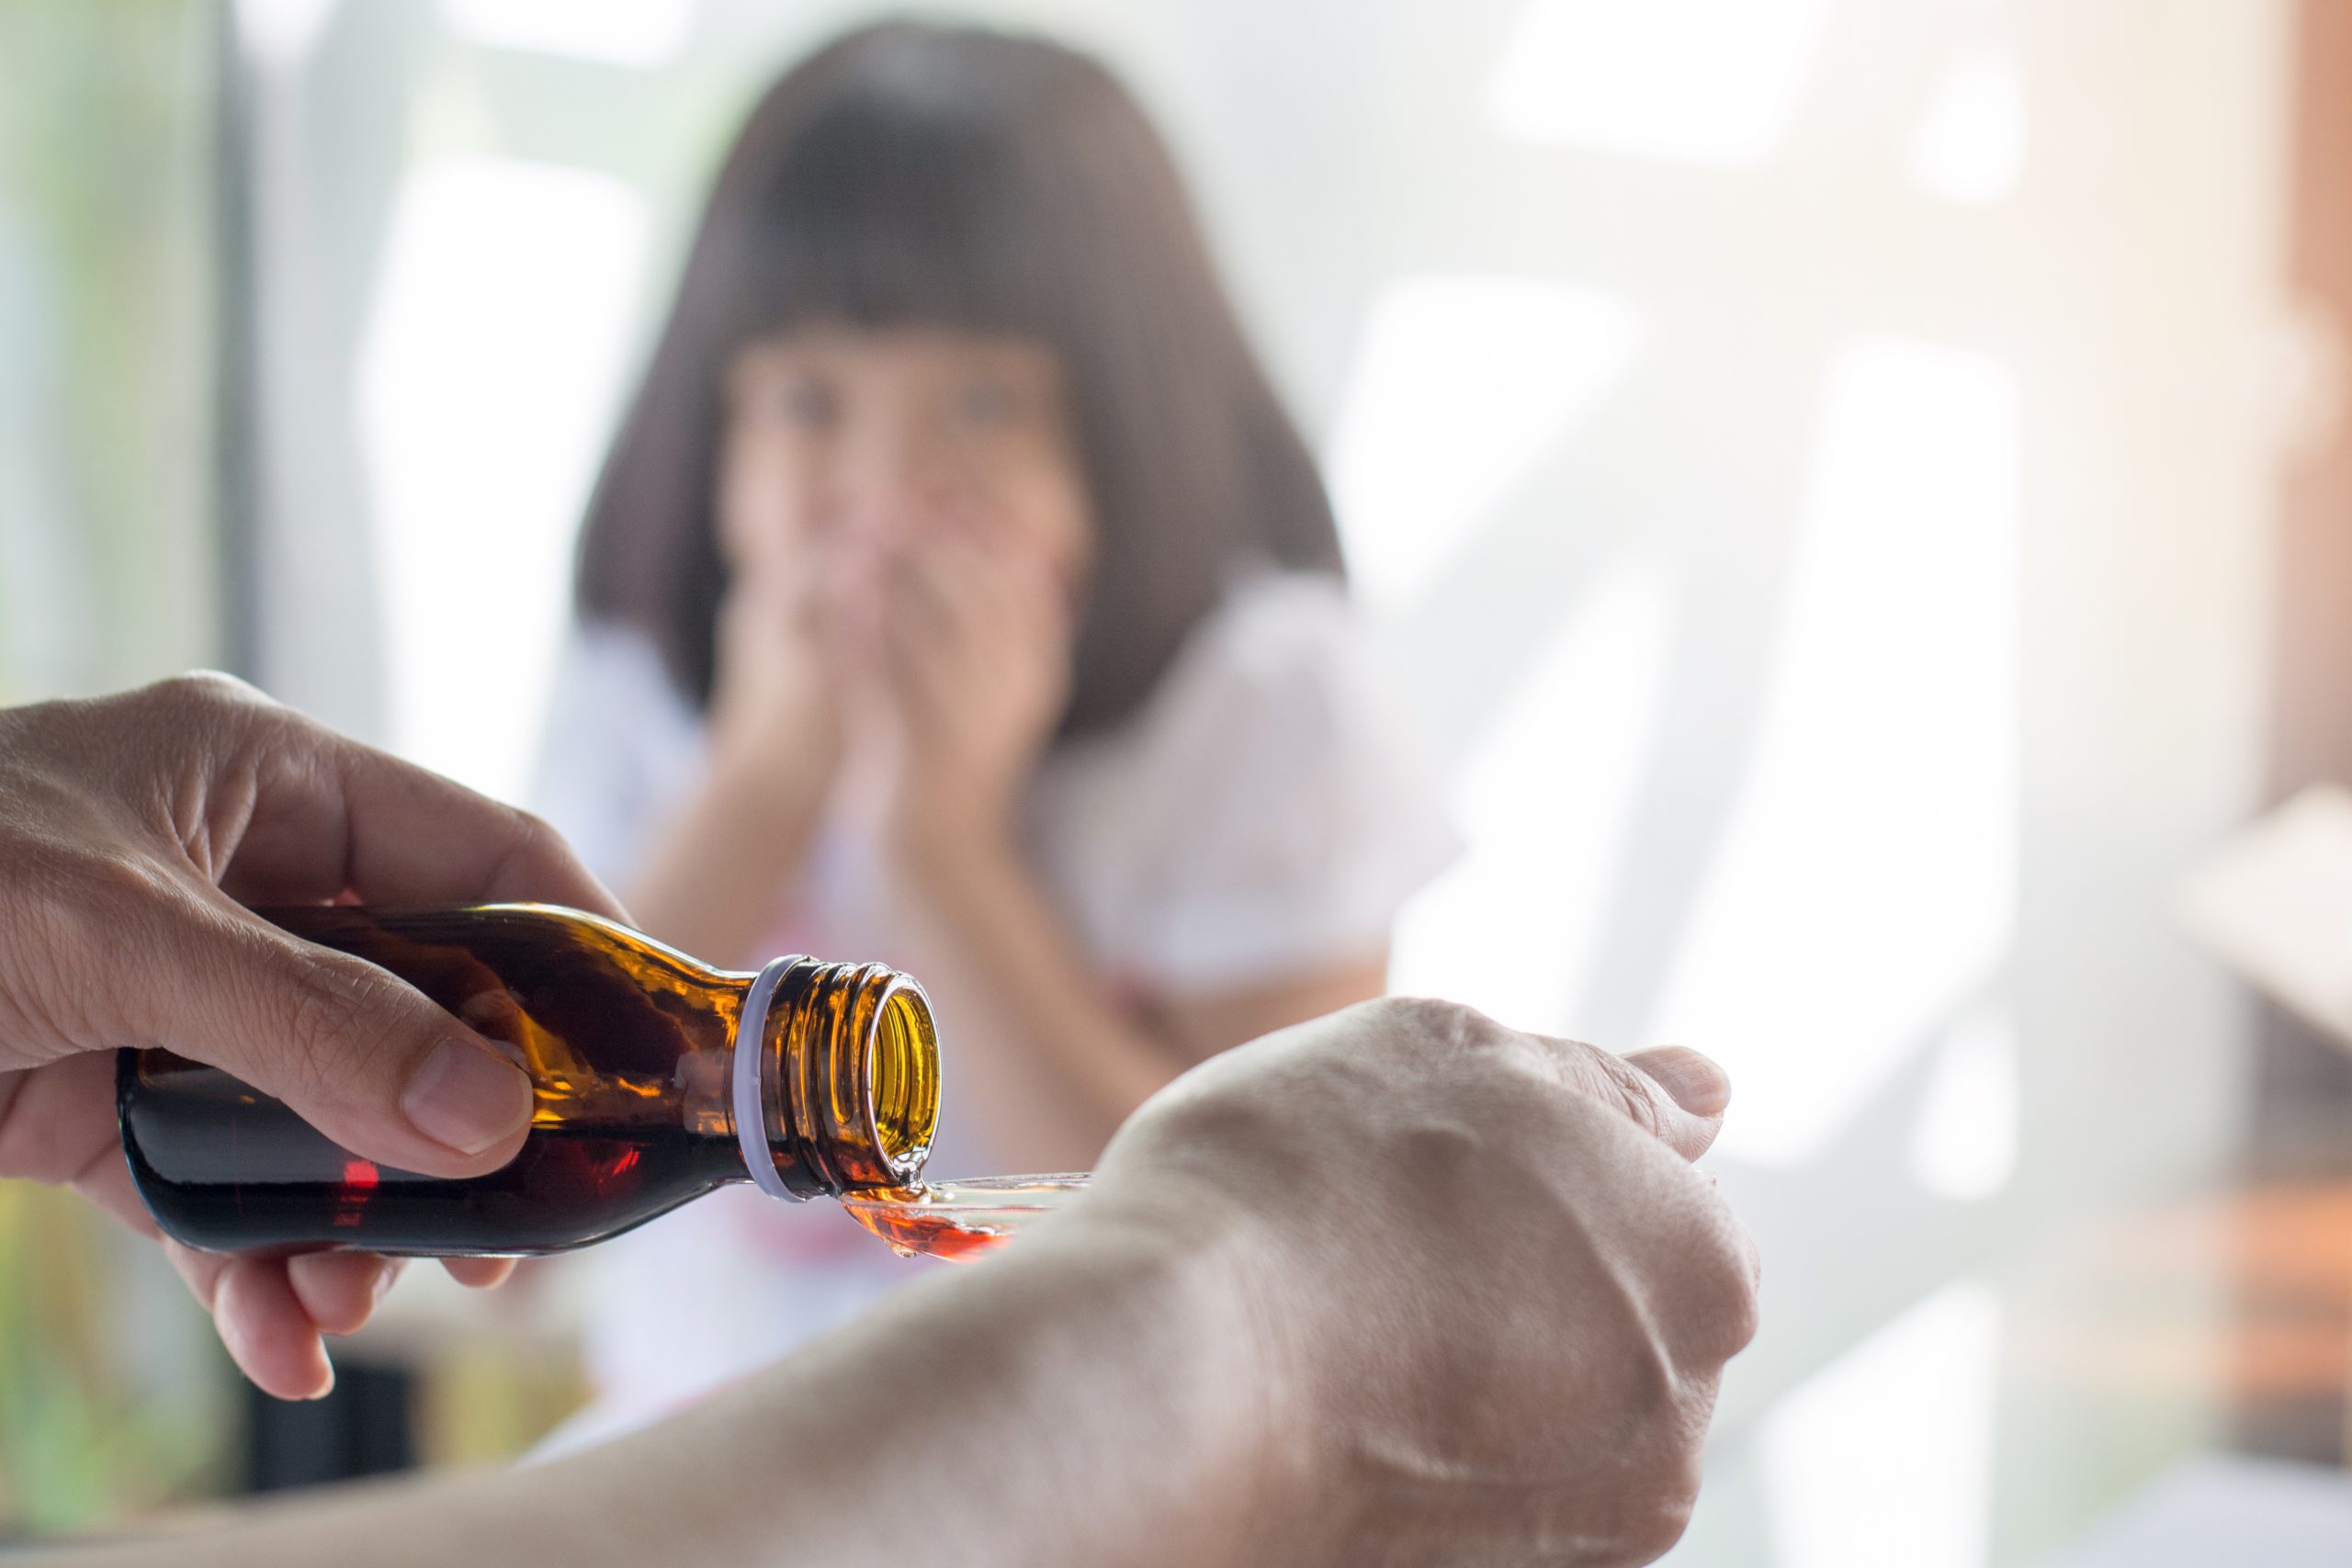 Child Medication Errors To Avoid